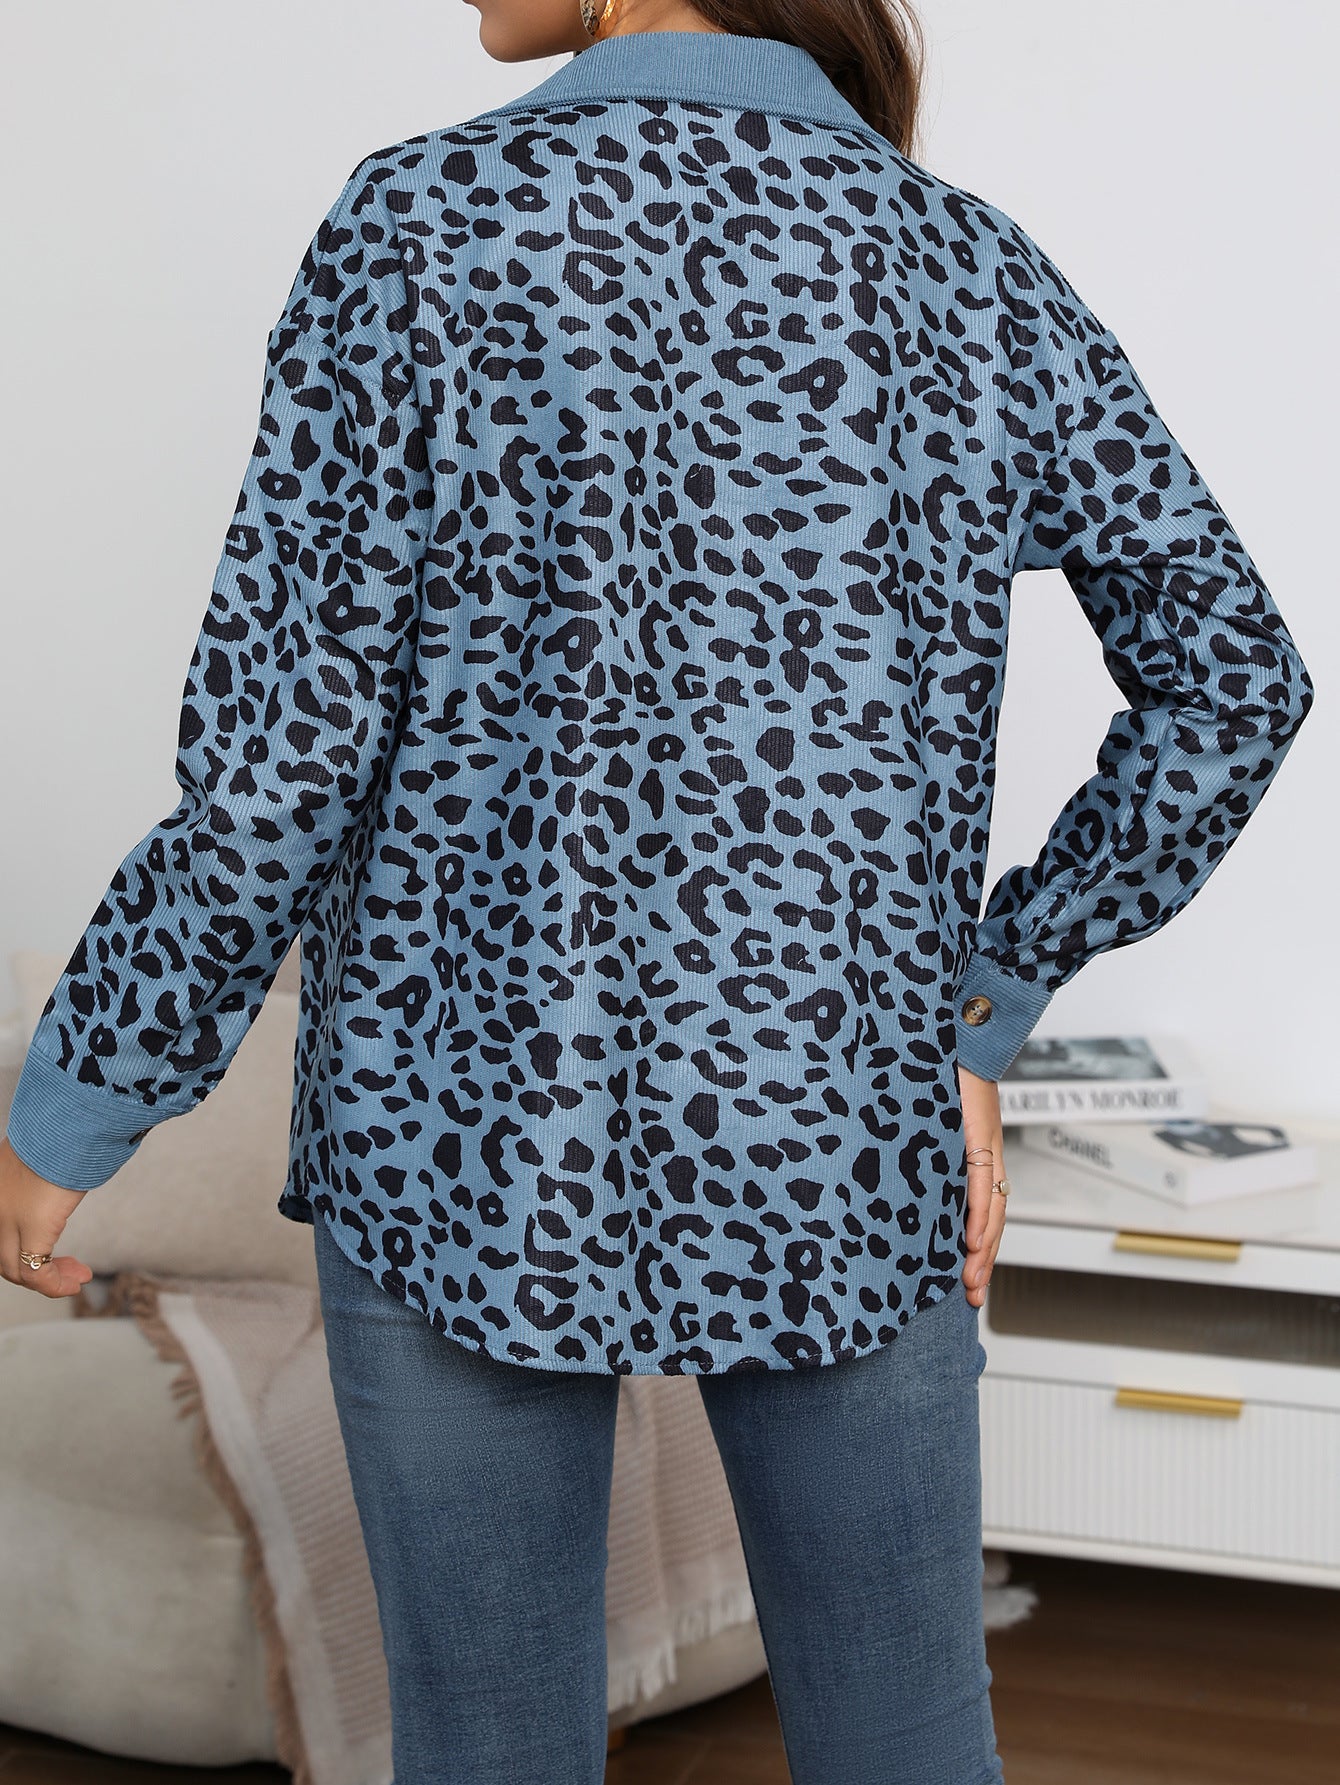 Leopard Print Shirt Coat Fashion Button Long Sleeve Jacket Women